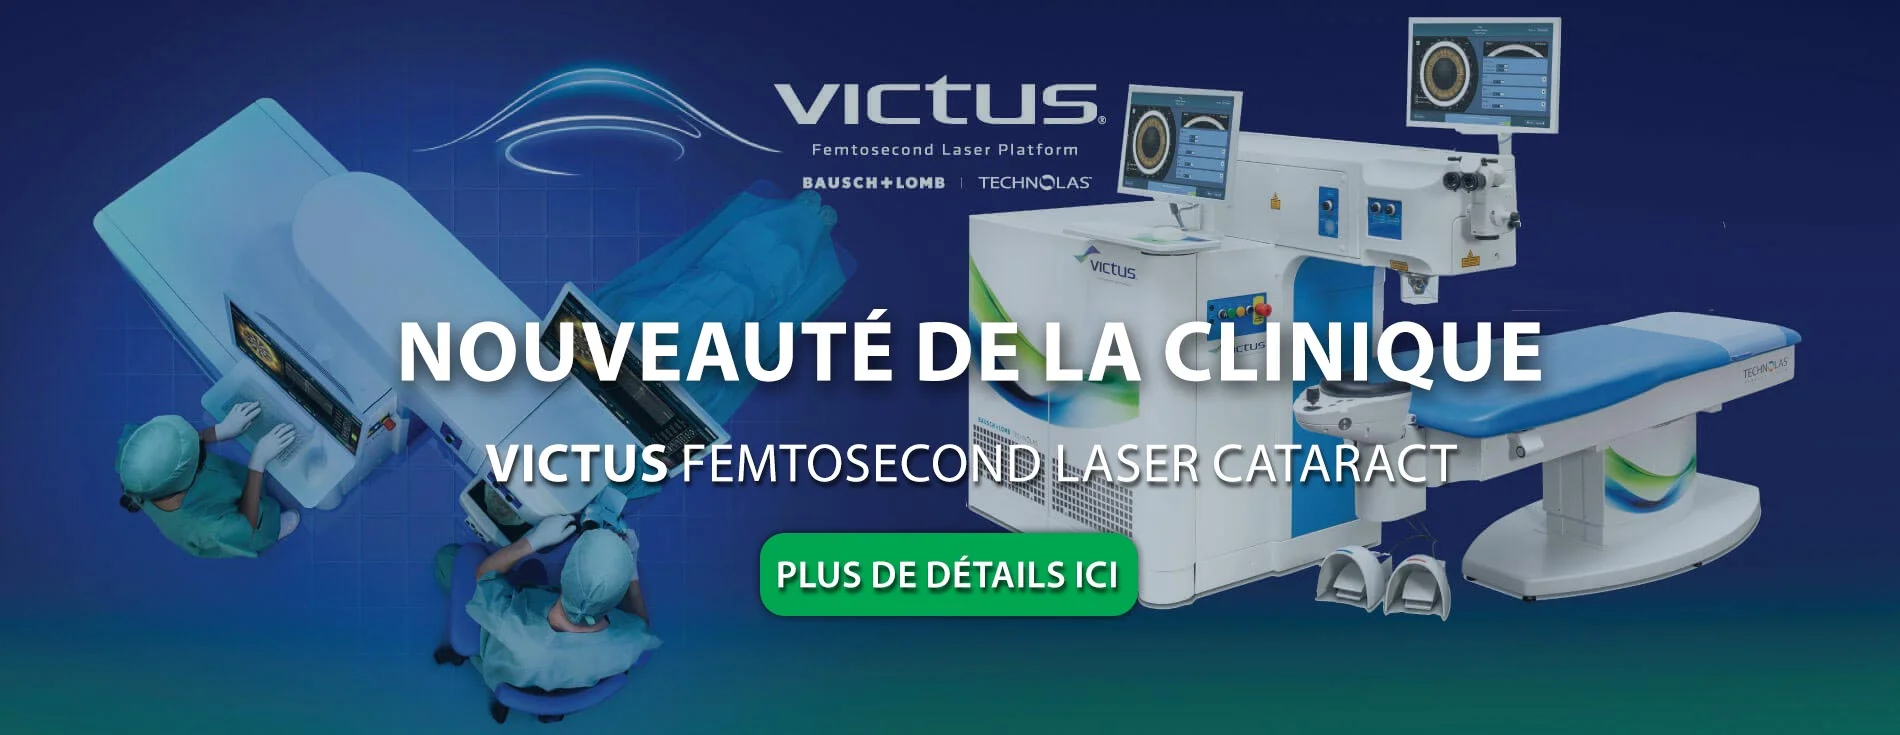 Nouveau VICTUS Femtosecond laser Cataract en Tunisie